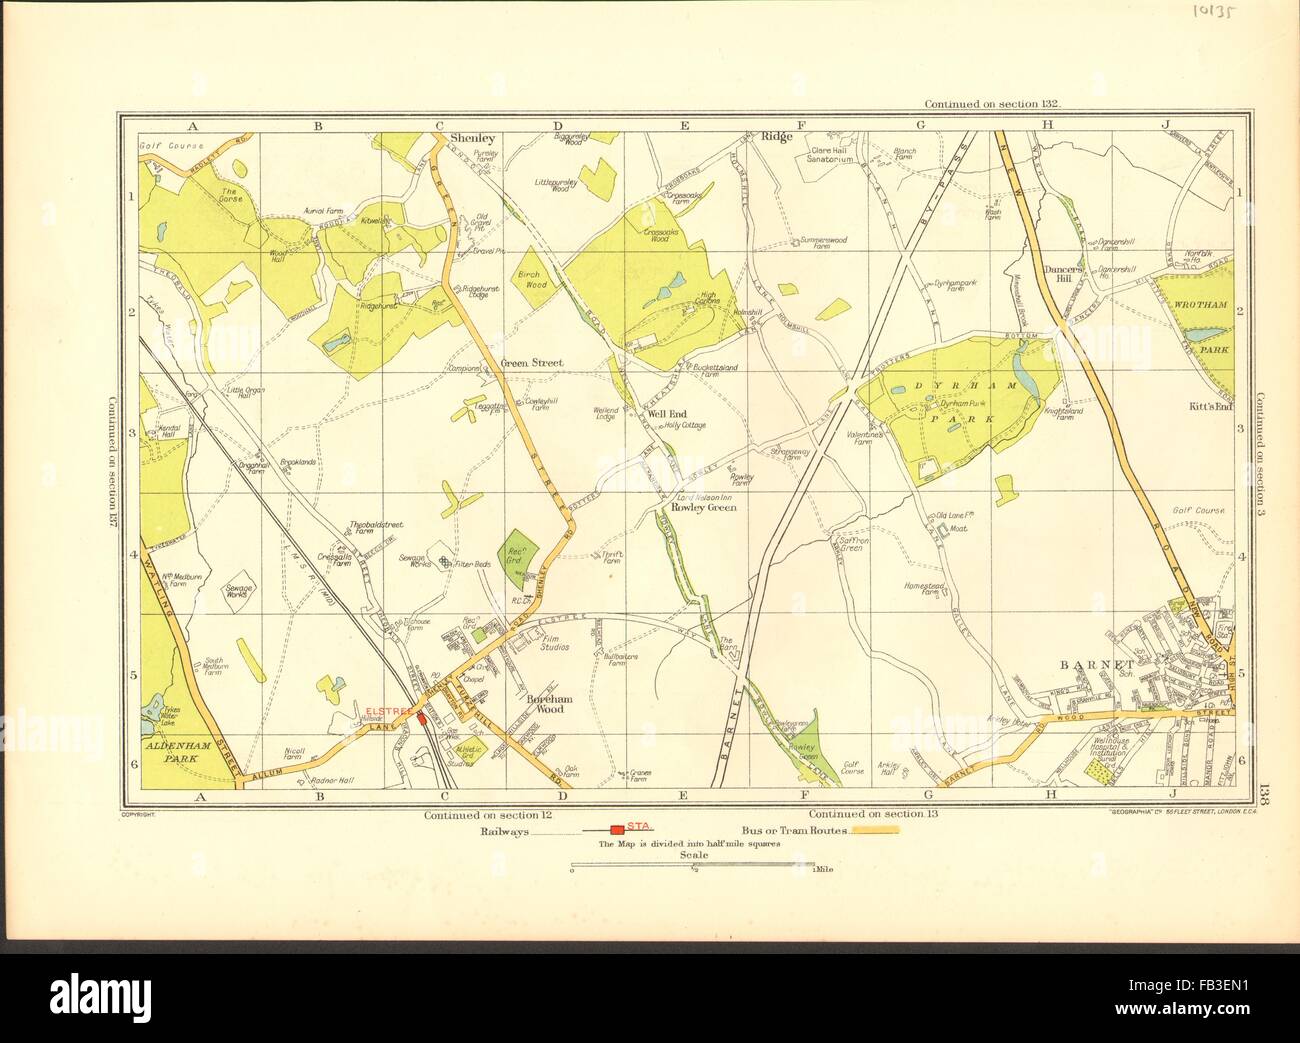 BOREHAMWOOD: Elstree, Barnet, Shenley, Ridge, Monken Hadley, 1937 Vintage map Foto Stock